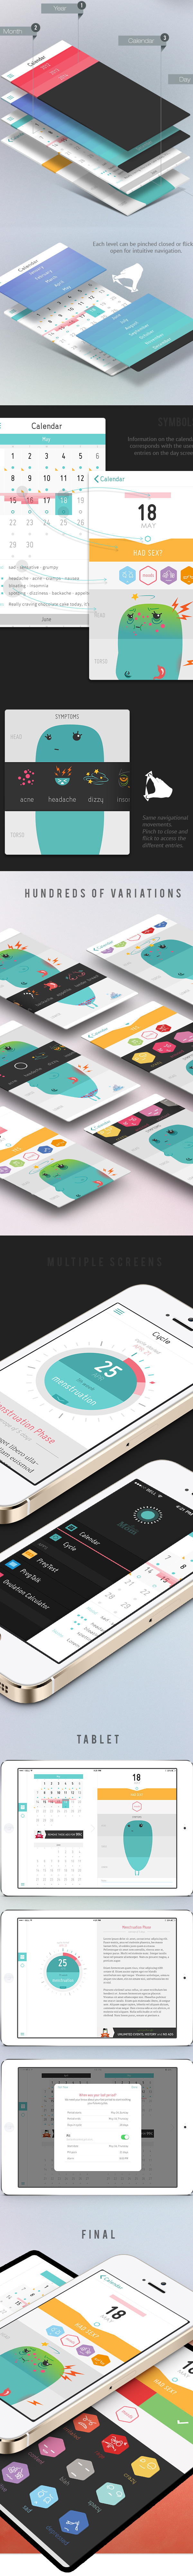 2.Mobile App Design Inspiration – Period Tracker